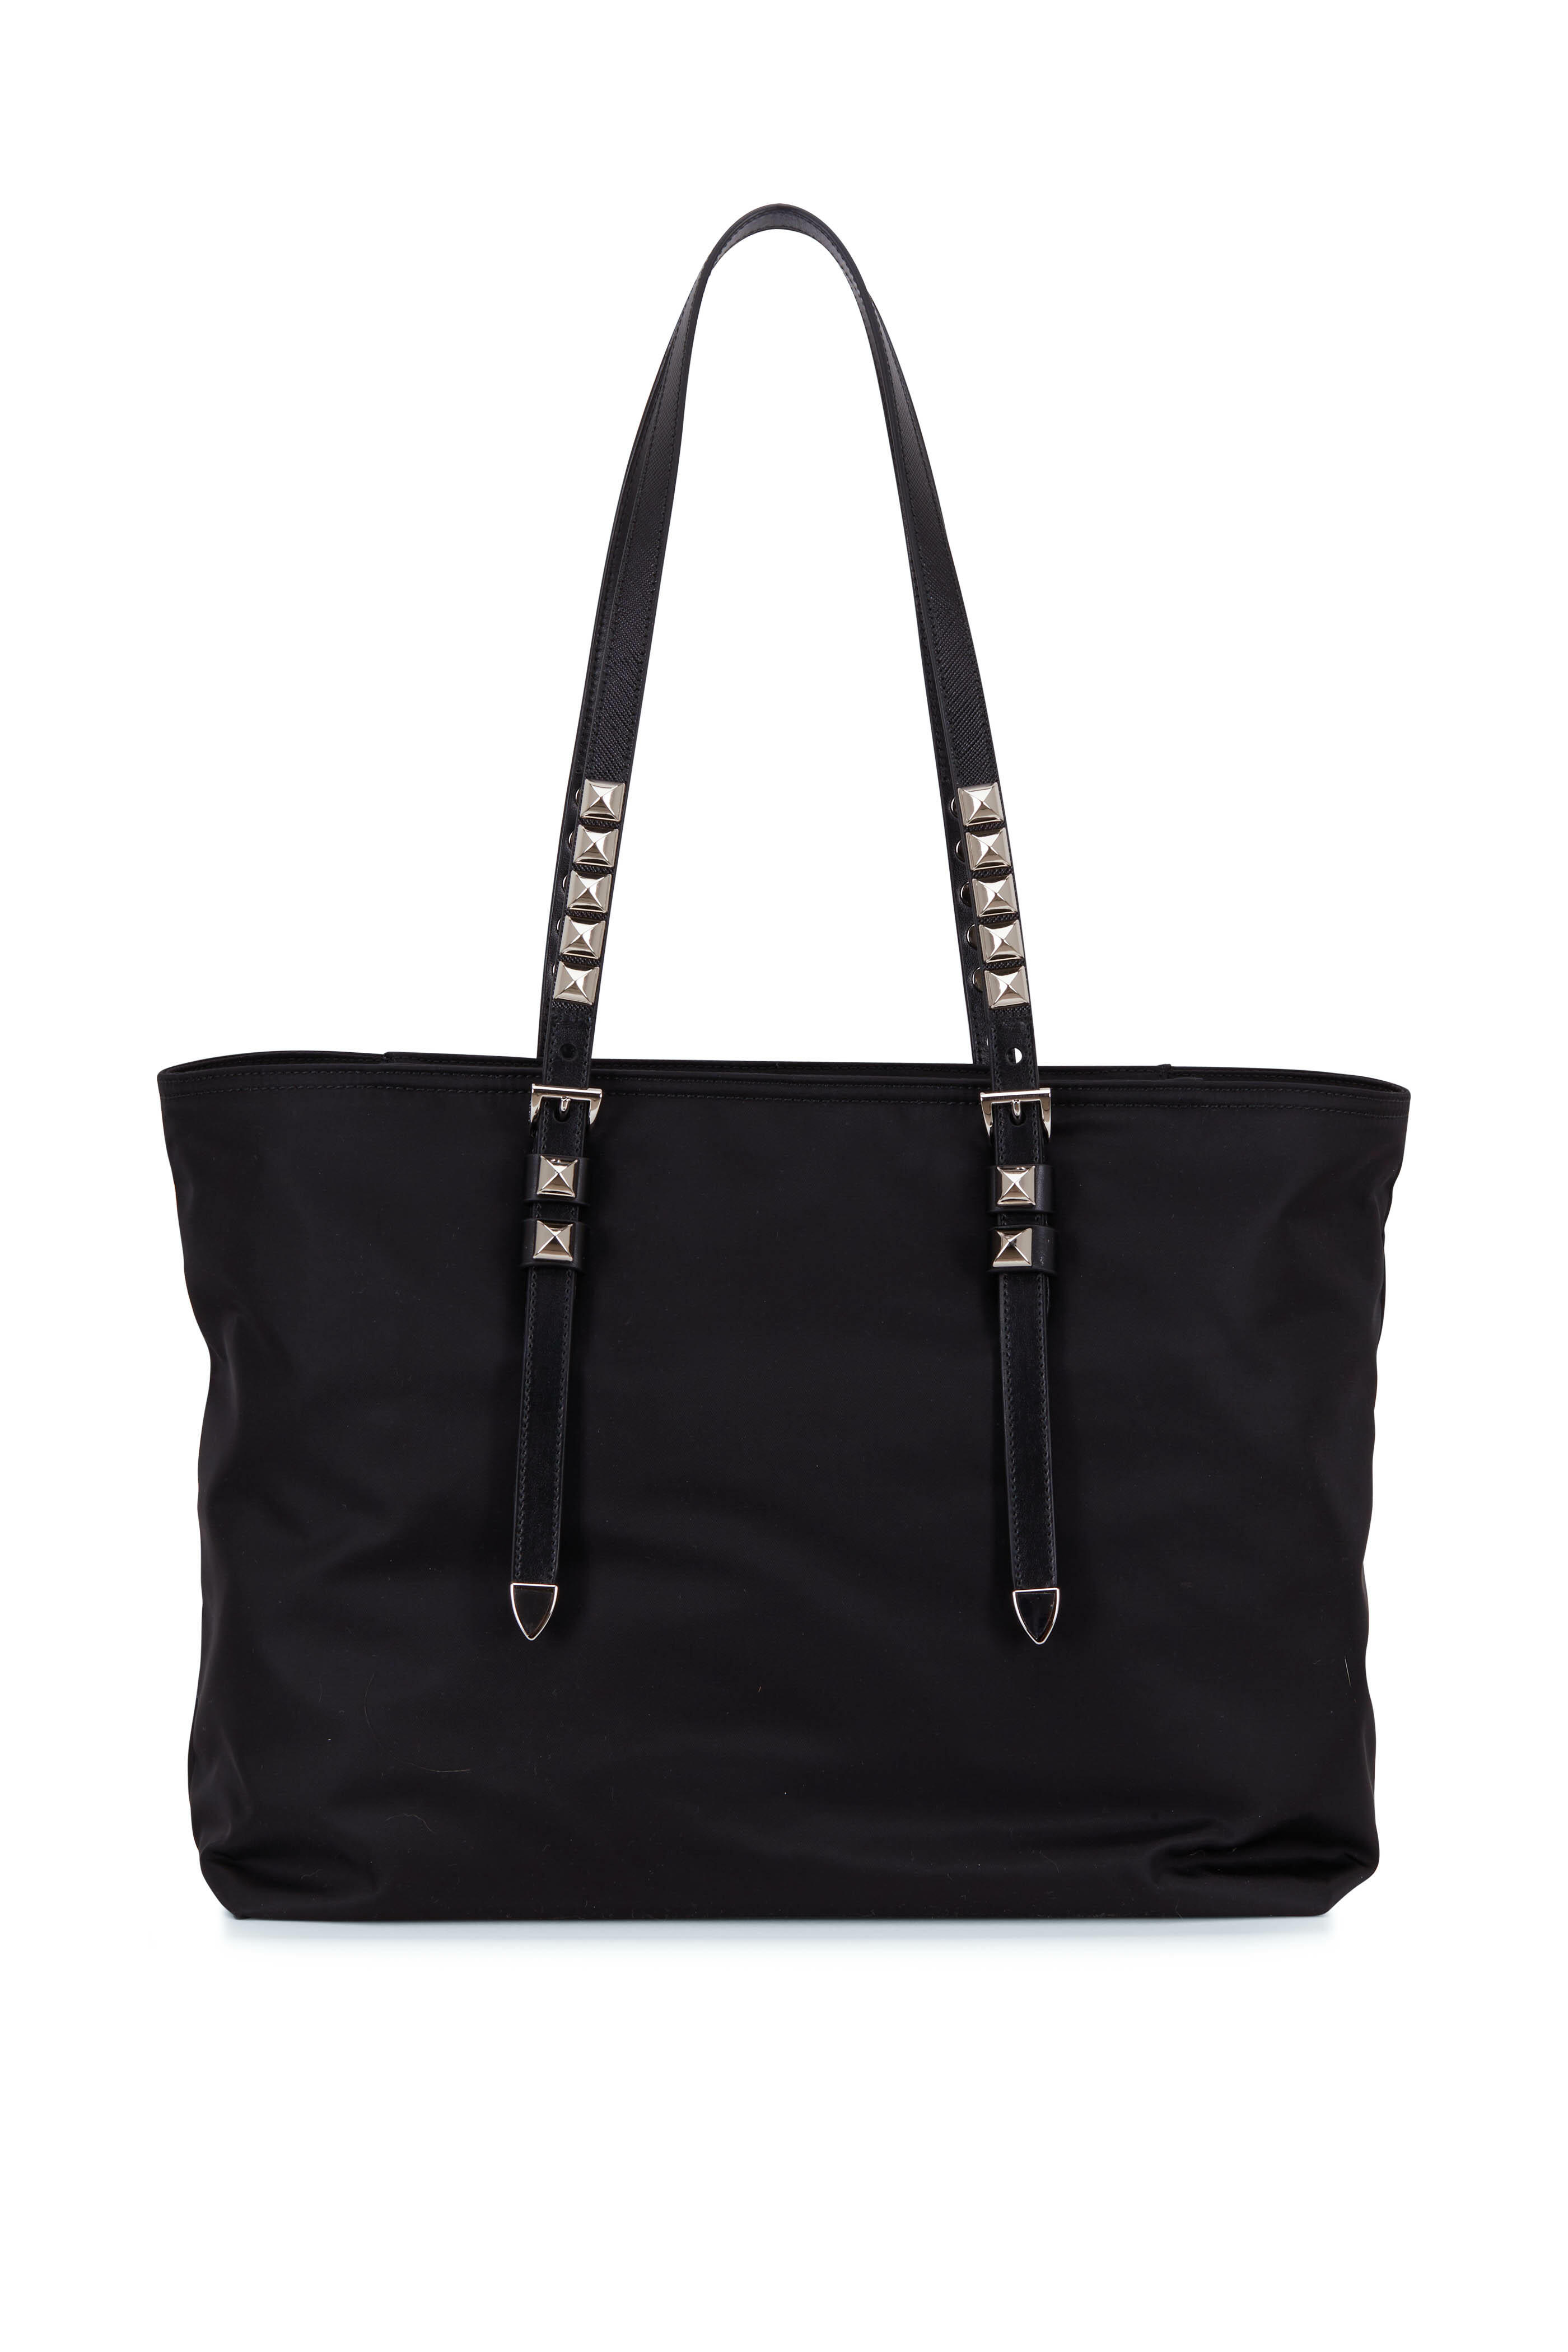 Prada - Black Nylon Stud-Embellished Tote Bag | Mitchell Stores